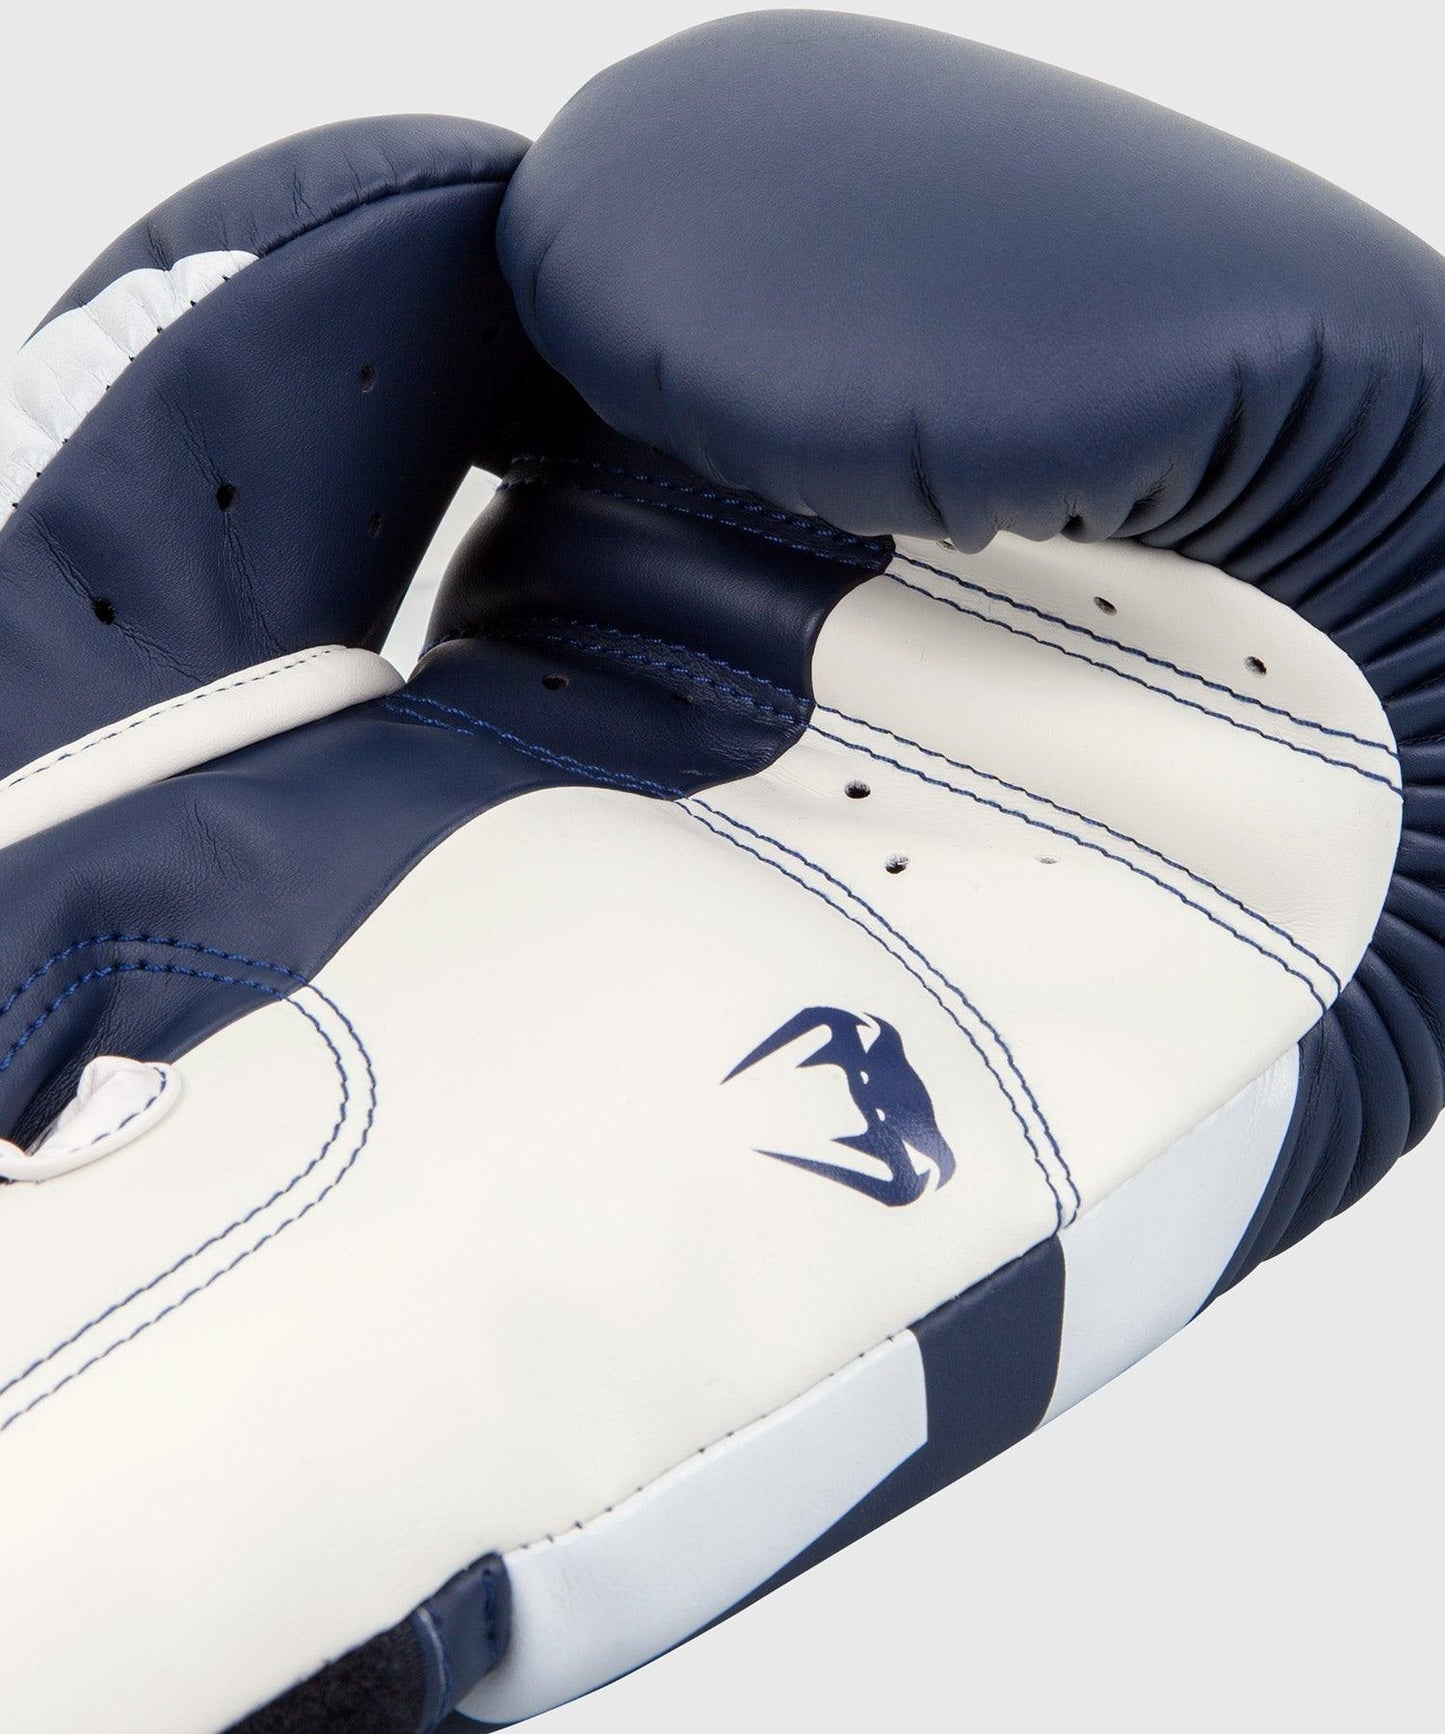 Venum Elite Boxing Gloves - White/Navy Blue Picture 4